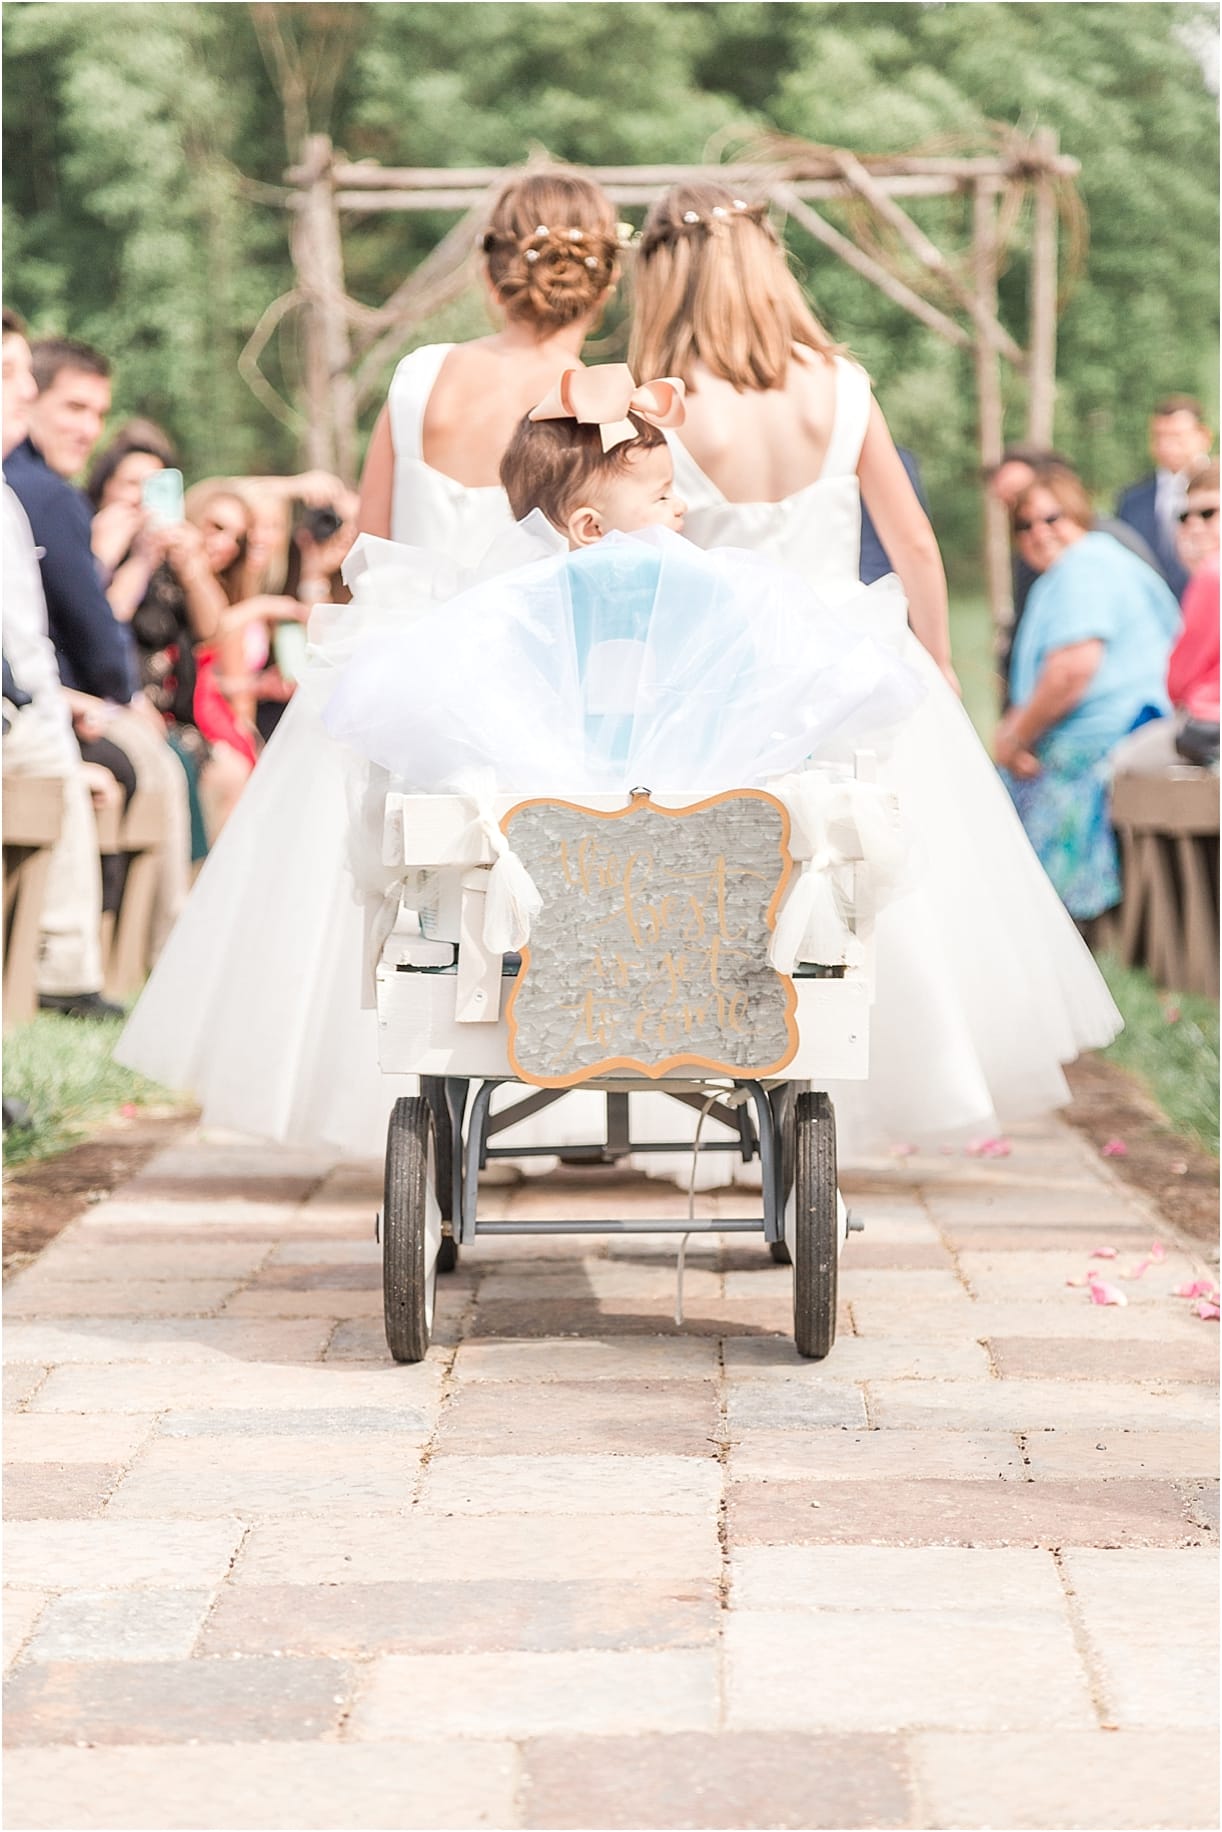 Spring Vineyard Wedding | Hill City Bride Virginia Wedding Blog - Jessica Green Photography - flower girls, baby